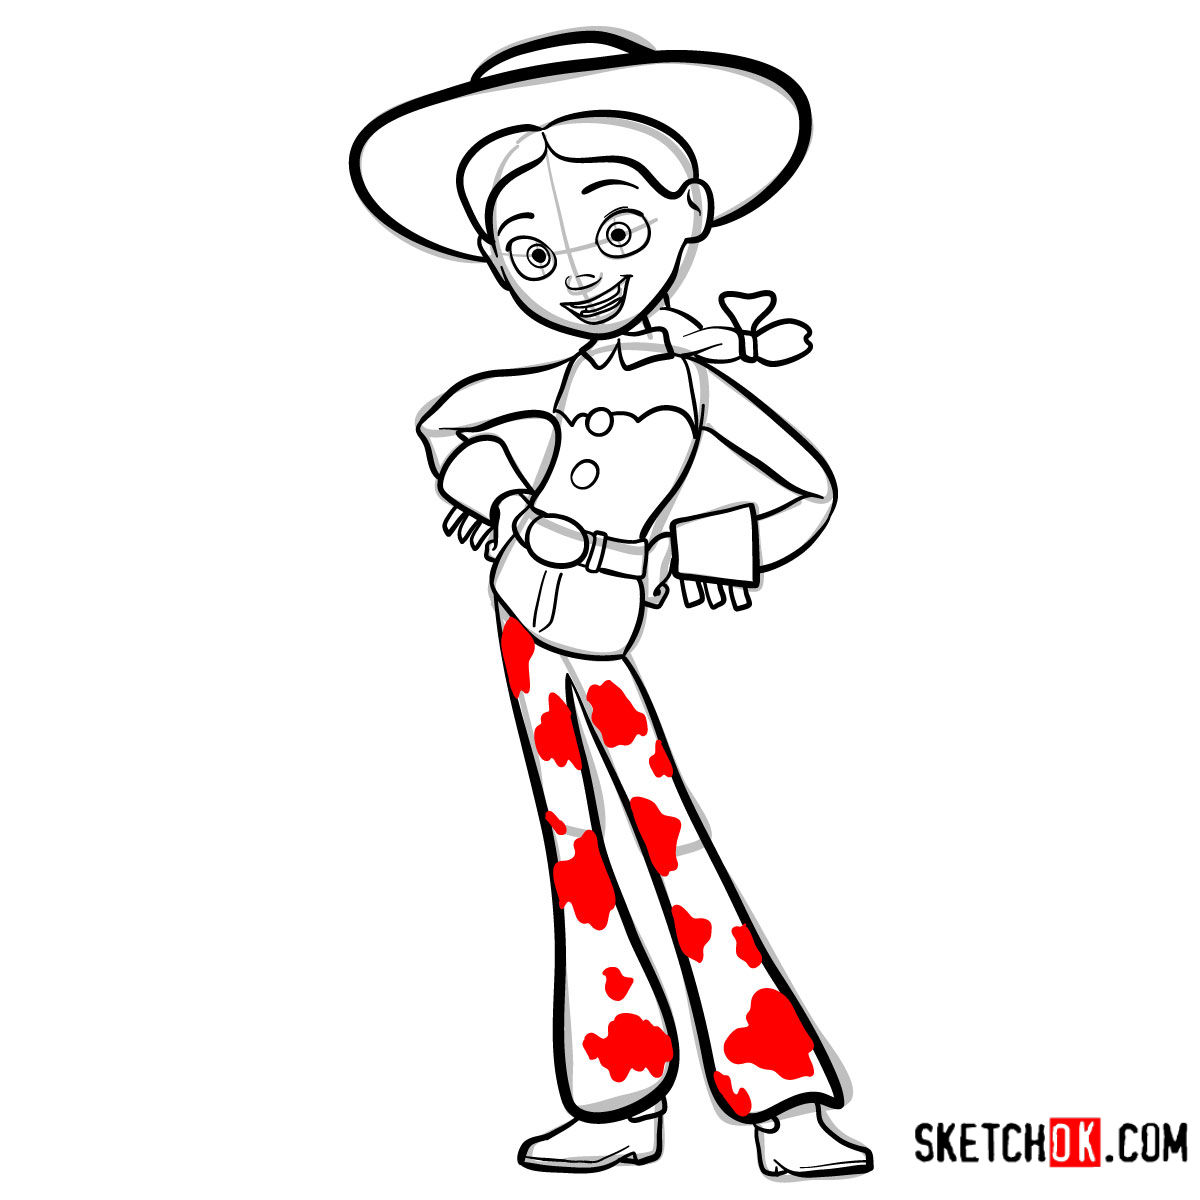 How to draw Jessie from Toy Story 2 - step 12